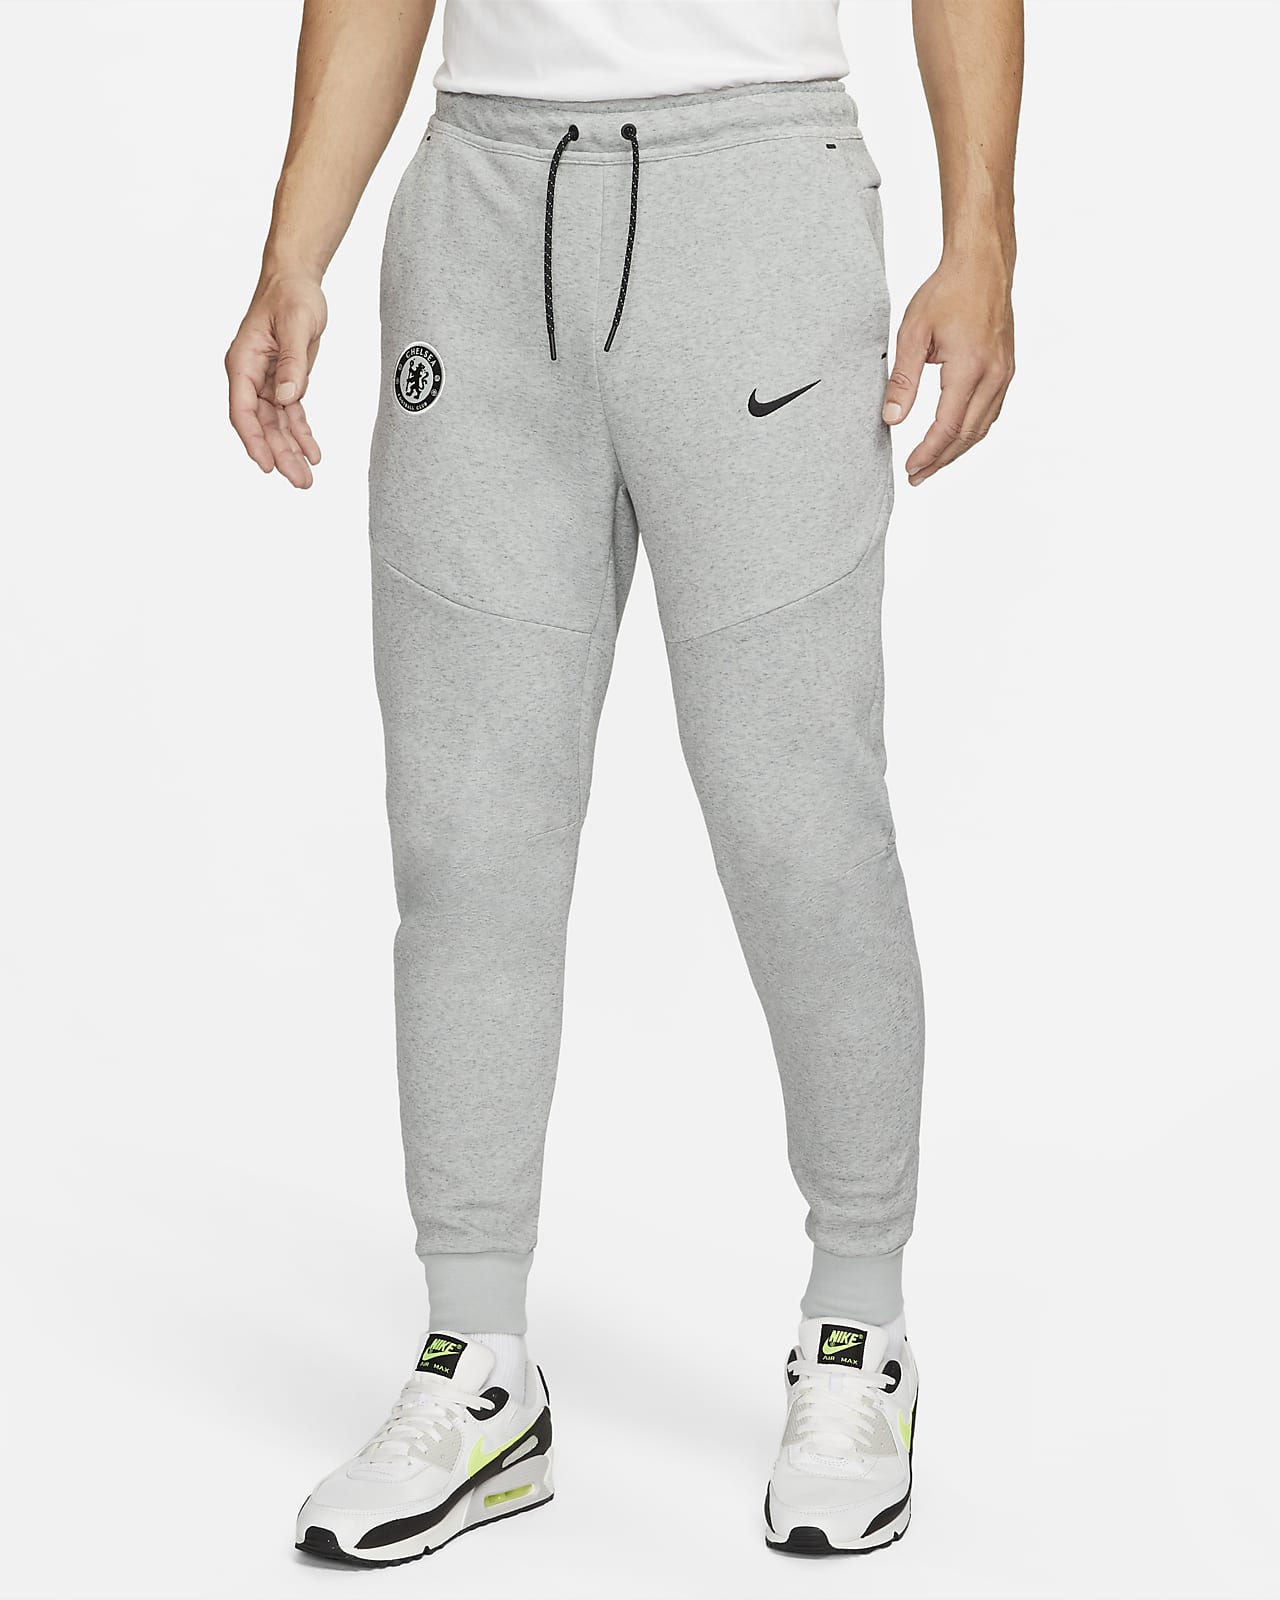 Fotbollssweats Chelsea FC Tech Fleece (tredjeställ) Nike för män